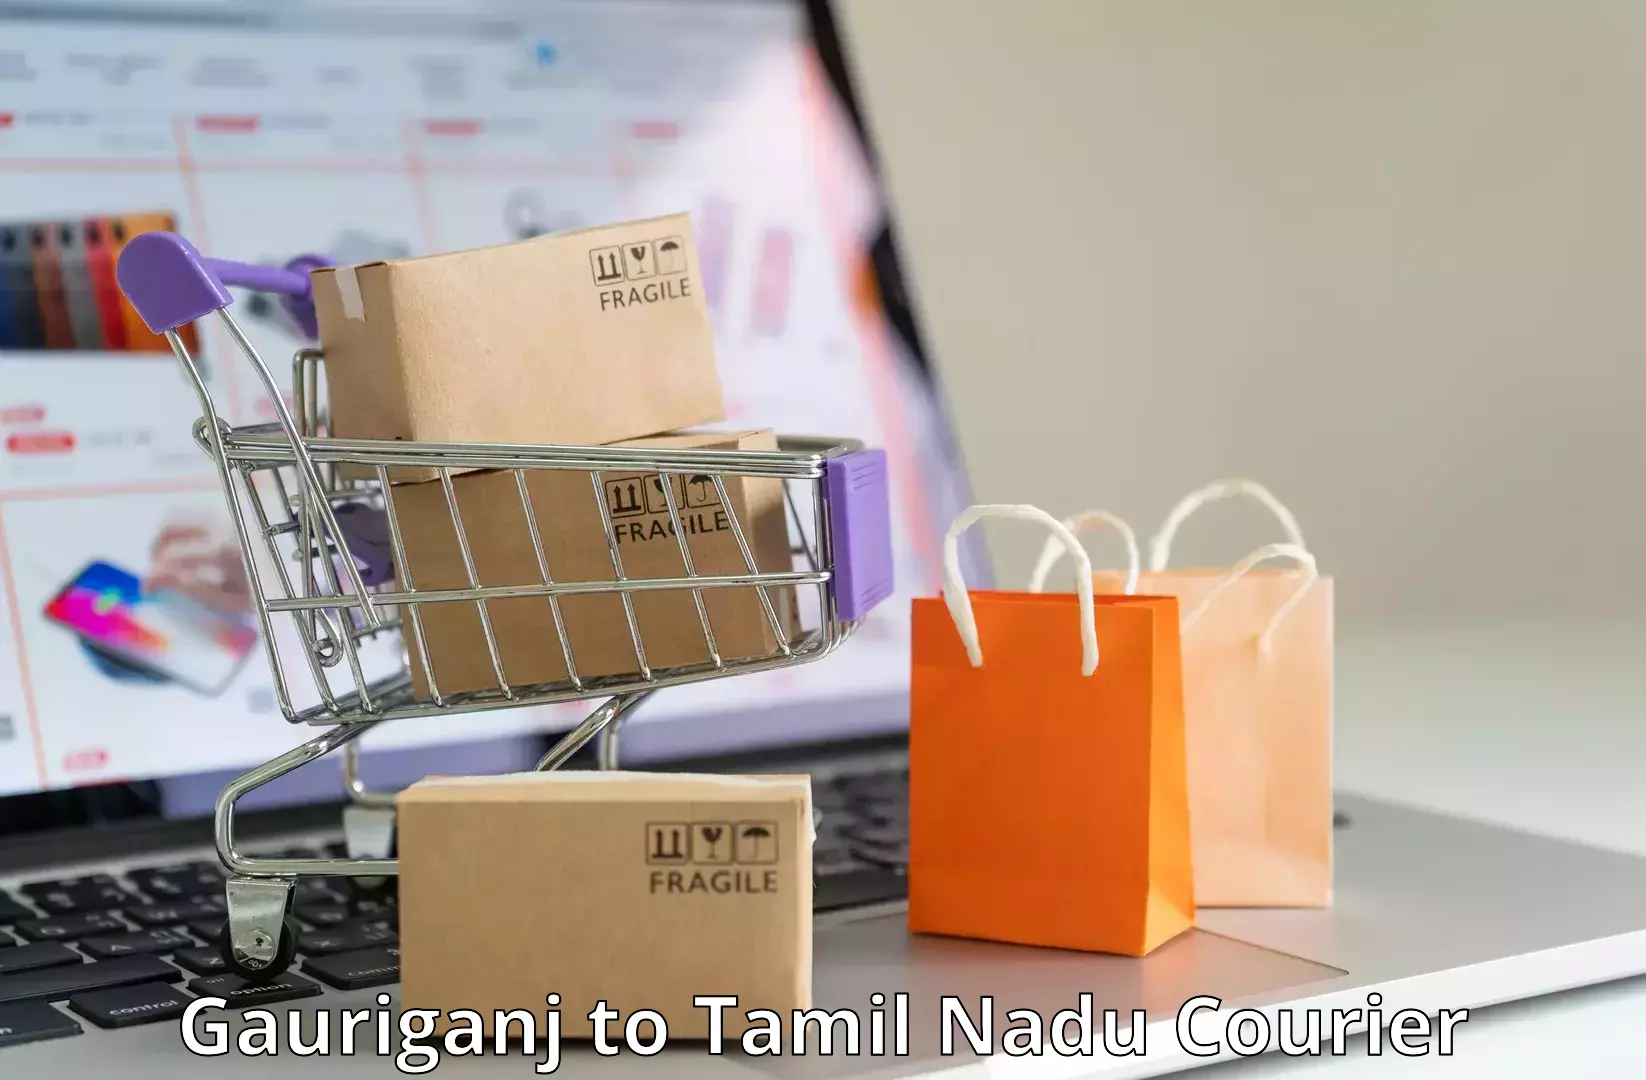 Large package courier Gauriganj to Periyakulam